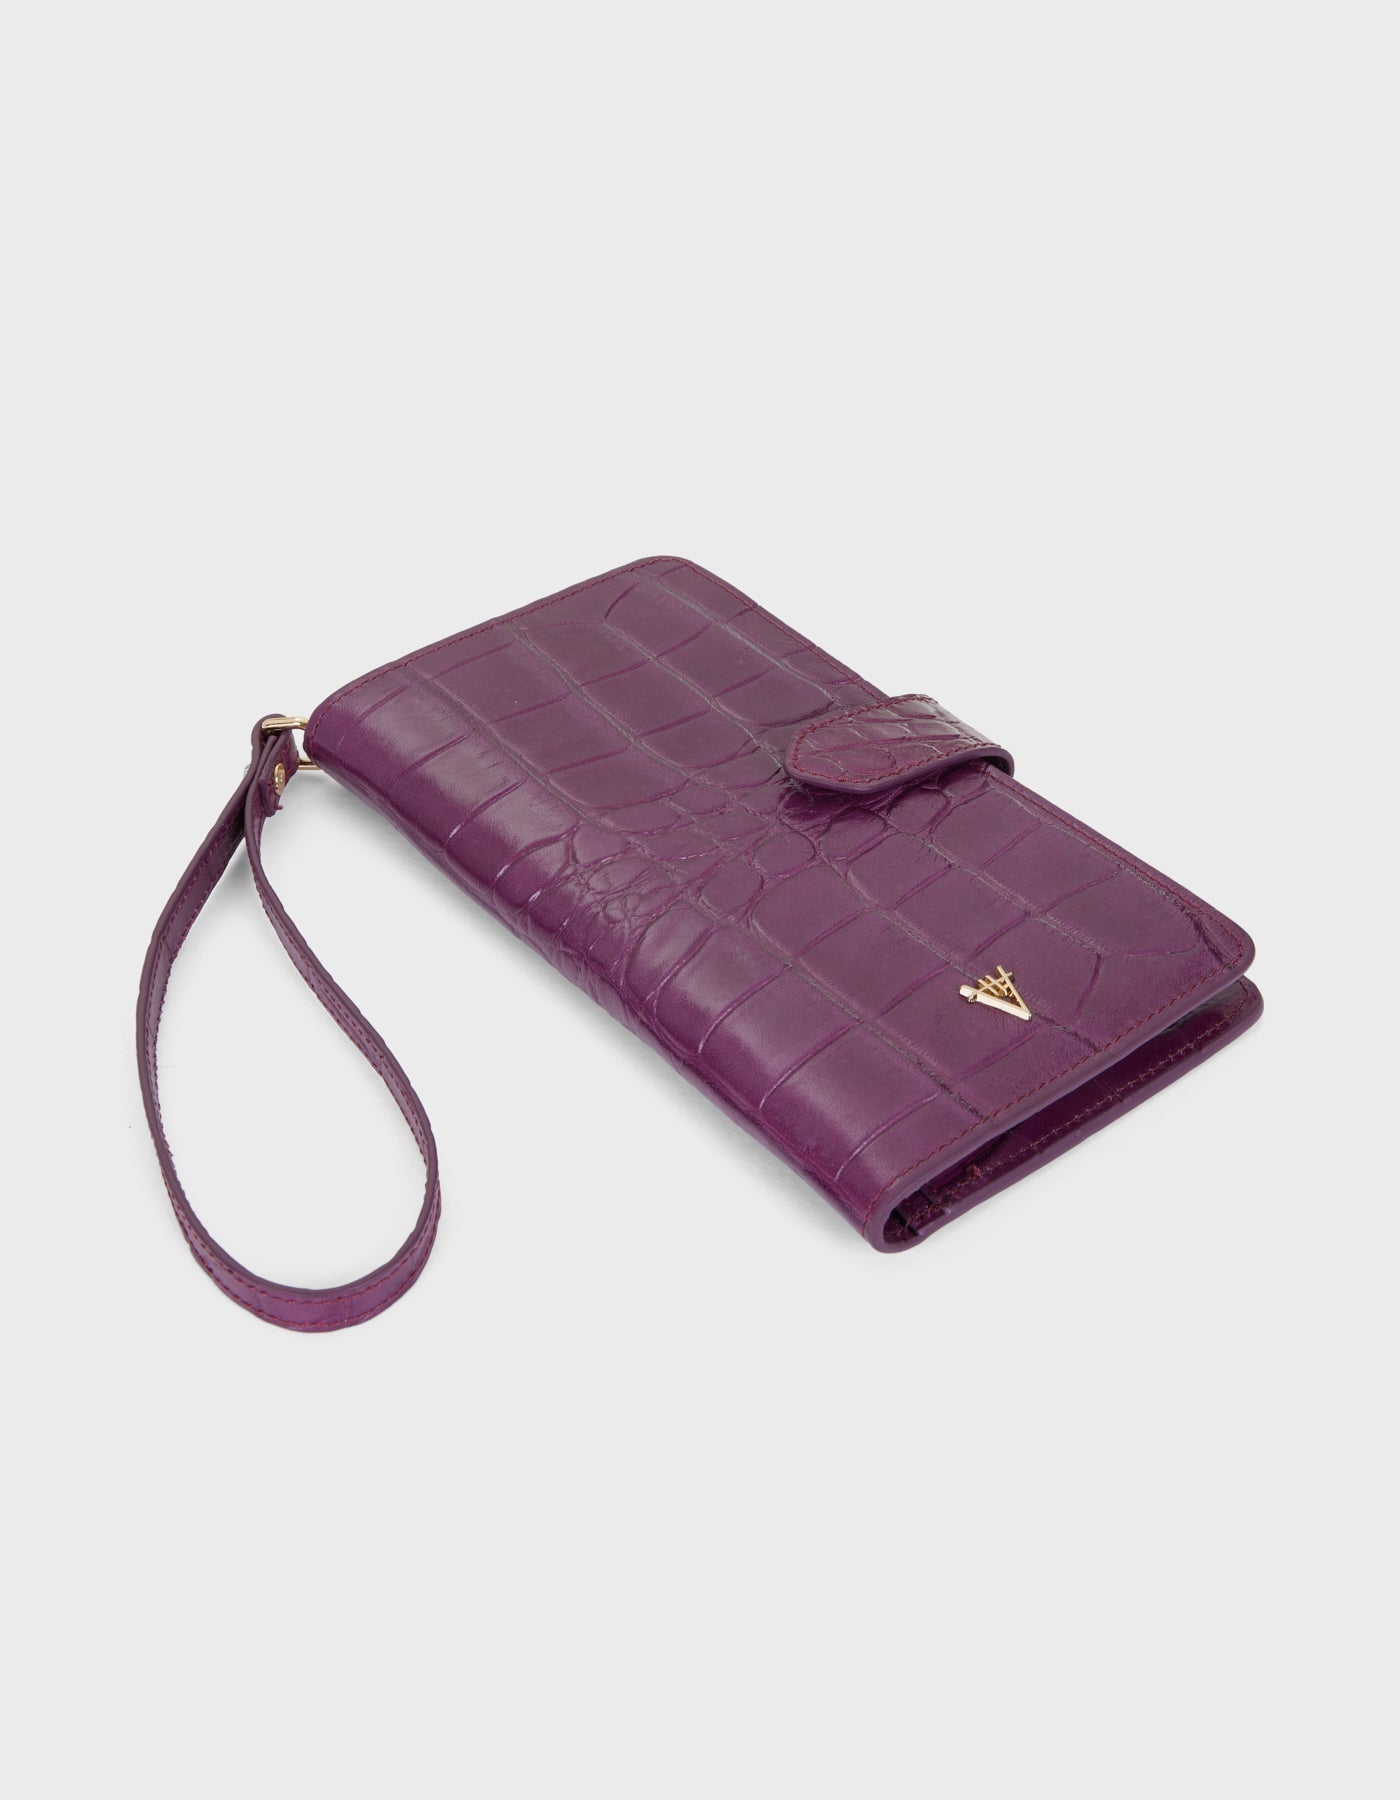 Ita Crossbody Bag & Wallet - Finest Quality HiVa Atelier GmbH Leather Accessories